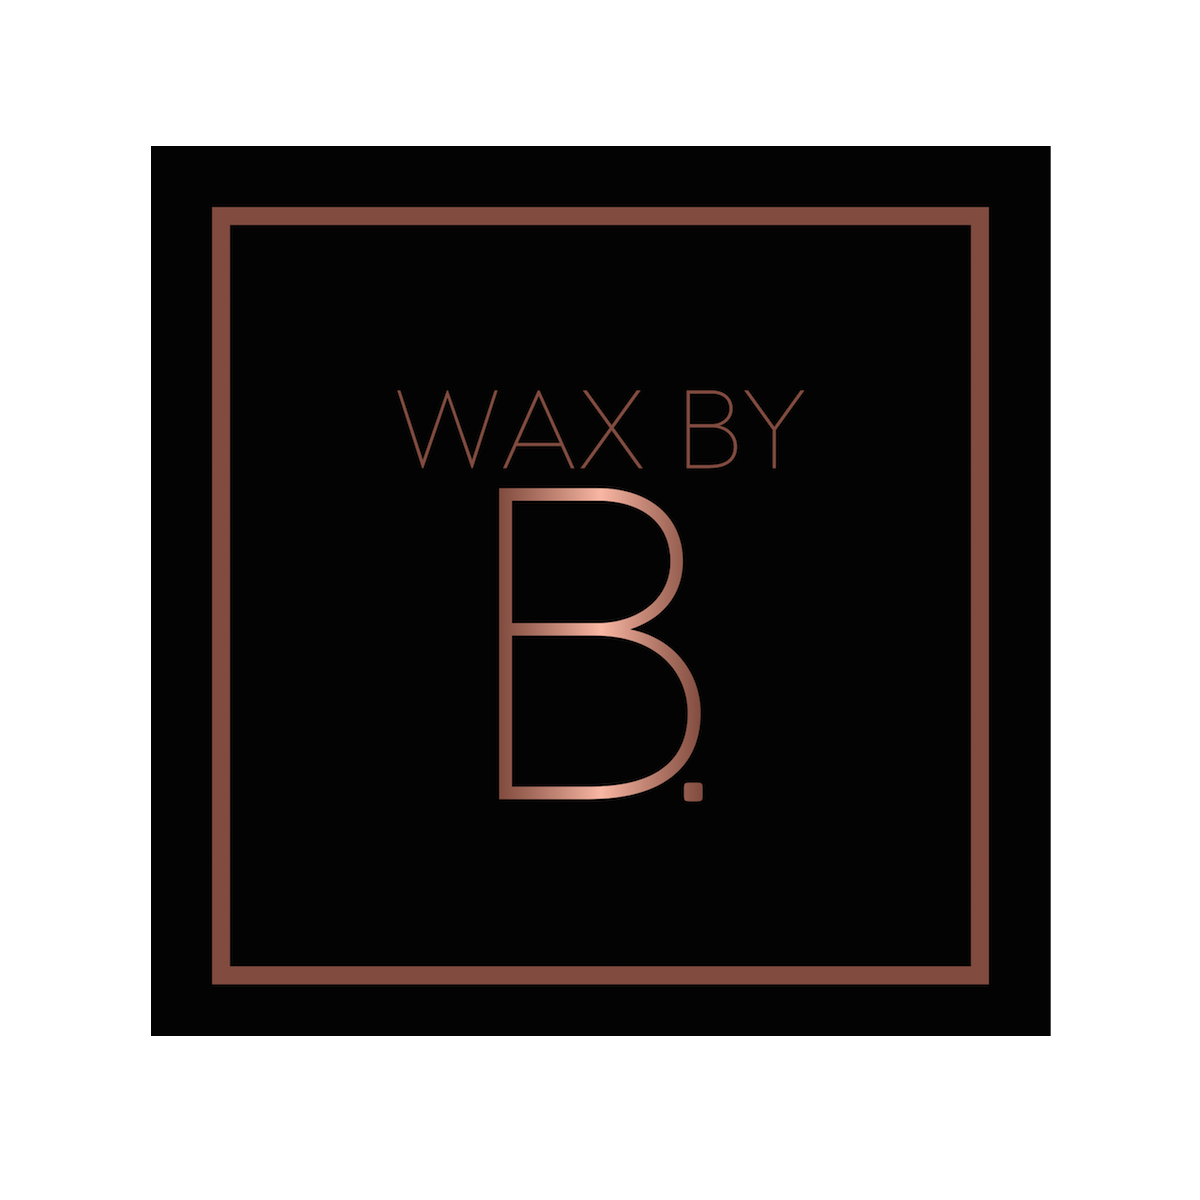 Wax by B brand logo